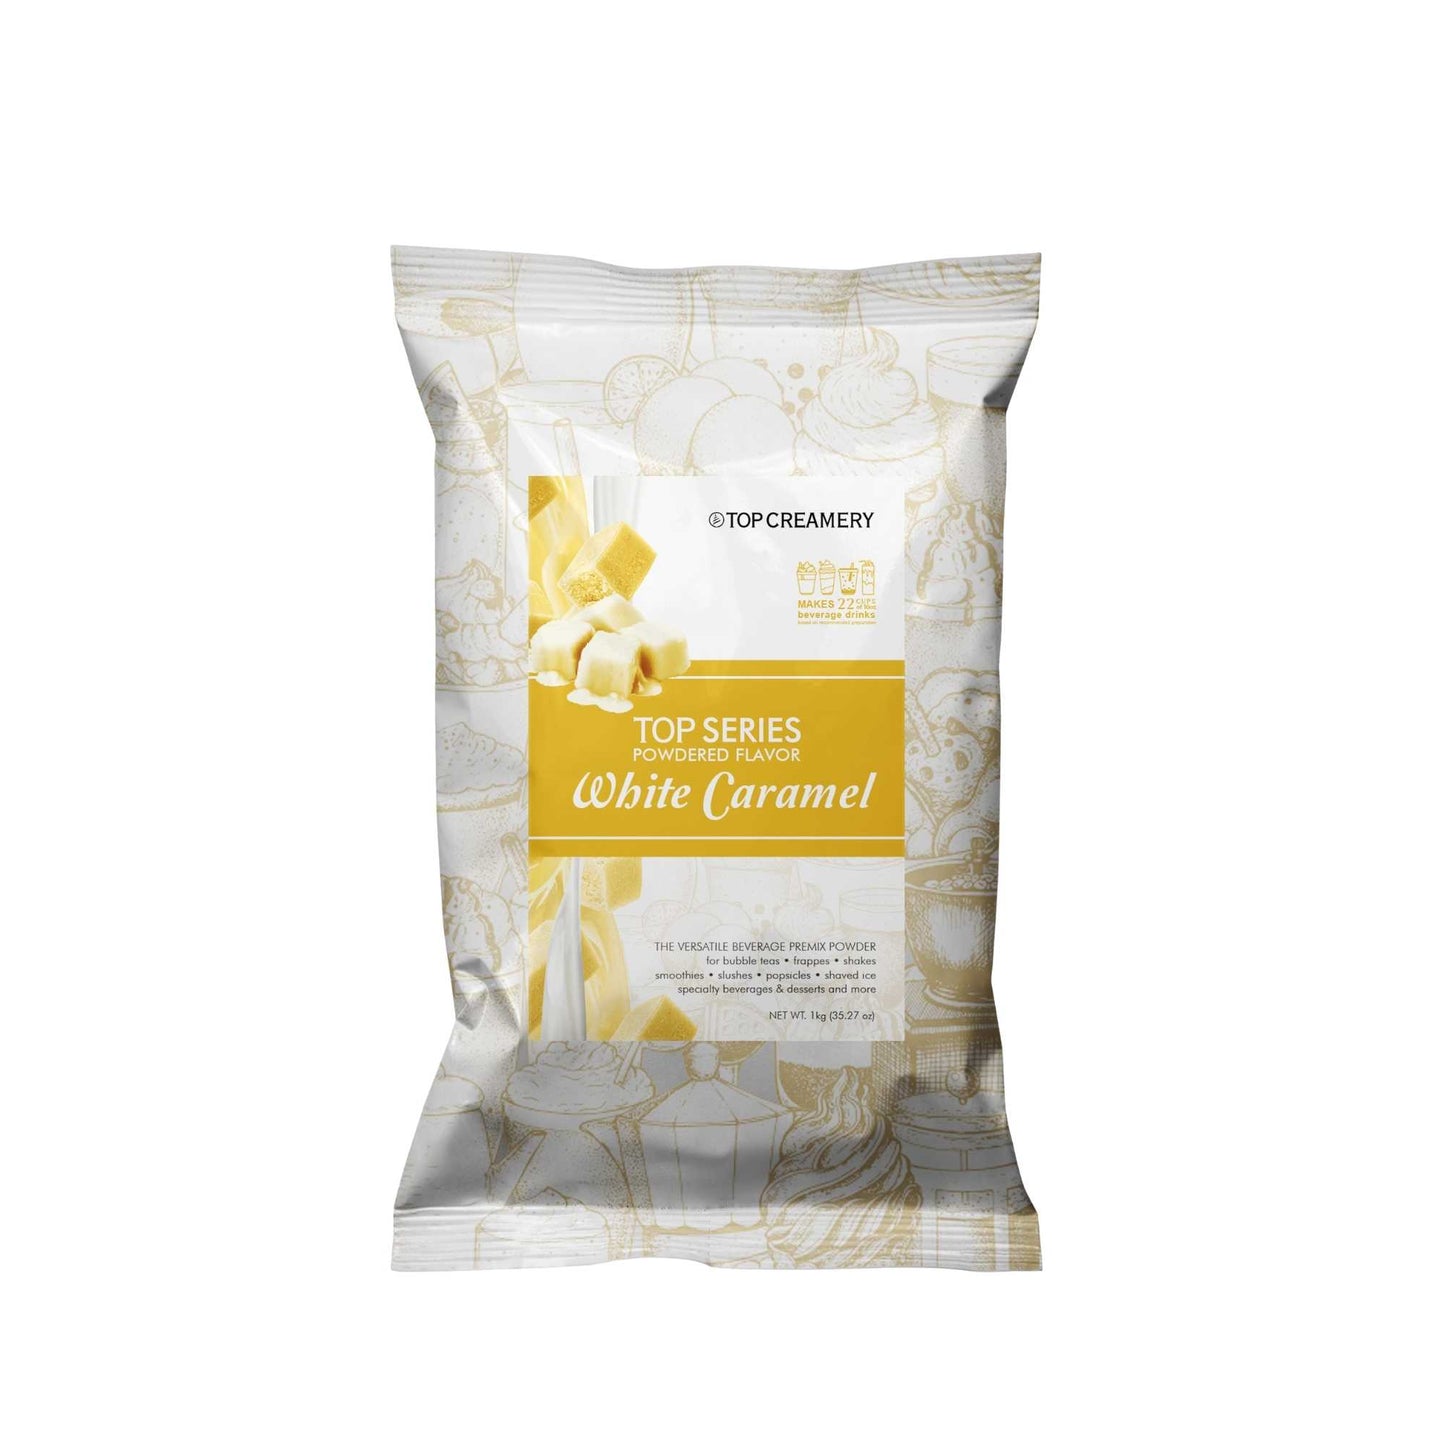 TOP Creamery Top Series White Caramel Powdered Flavor 1kg